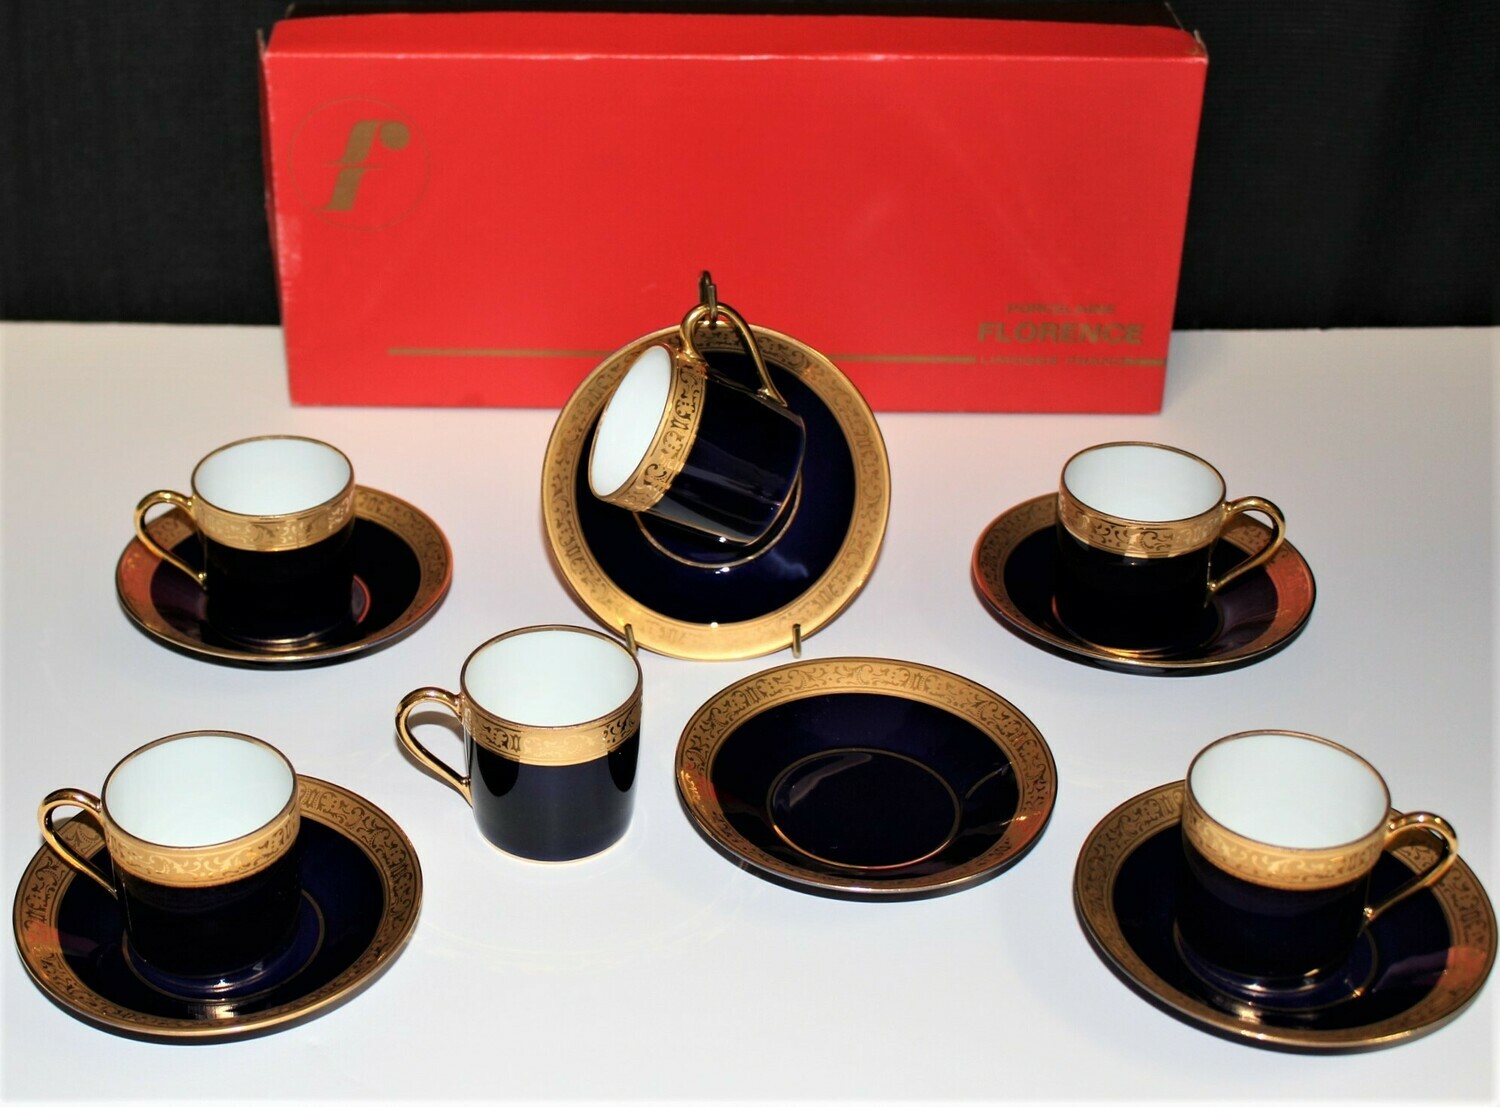 Espresso Cup and Saucer Set Handmade Blue Limoges Porcelain Ceramic Perfect  Size for Single Double Shot Espresso 